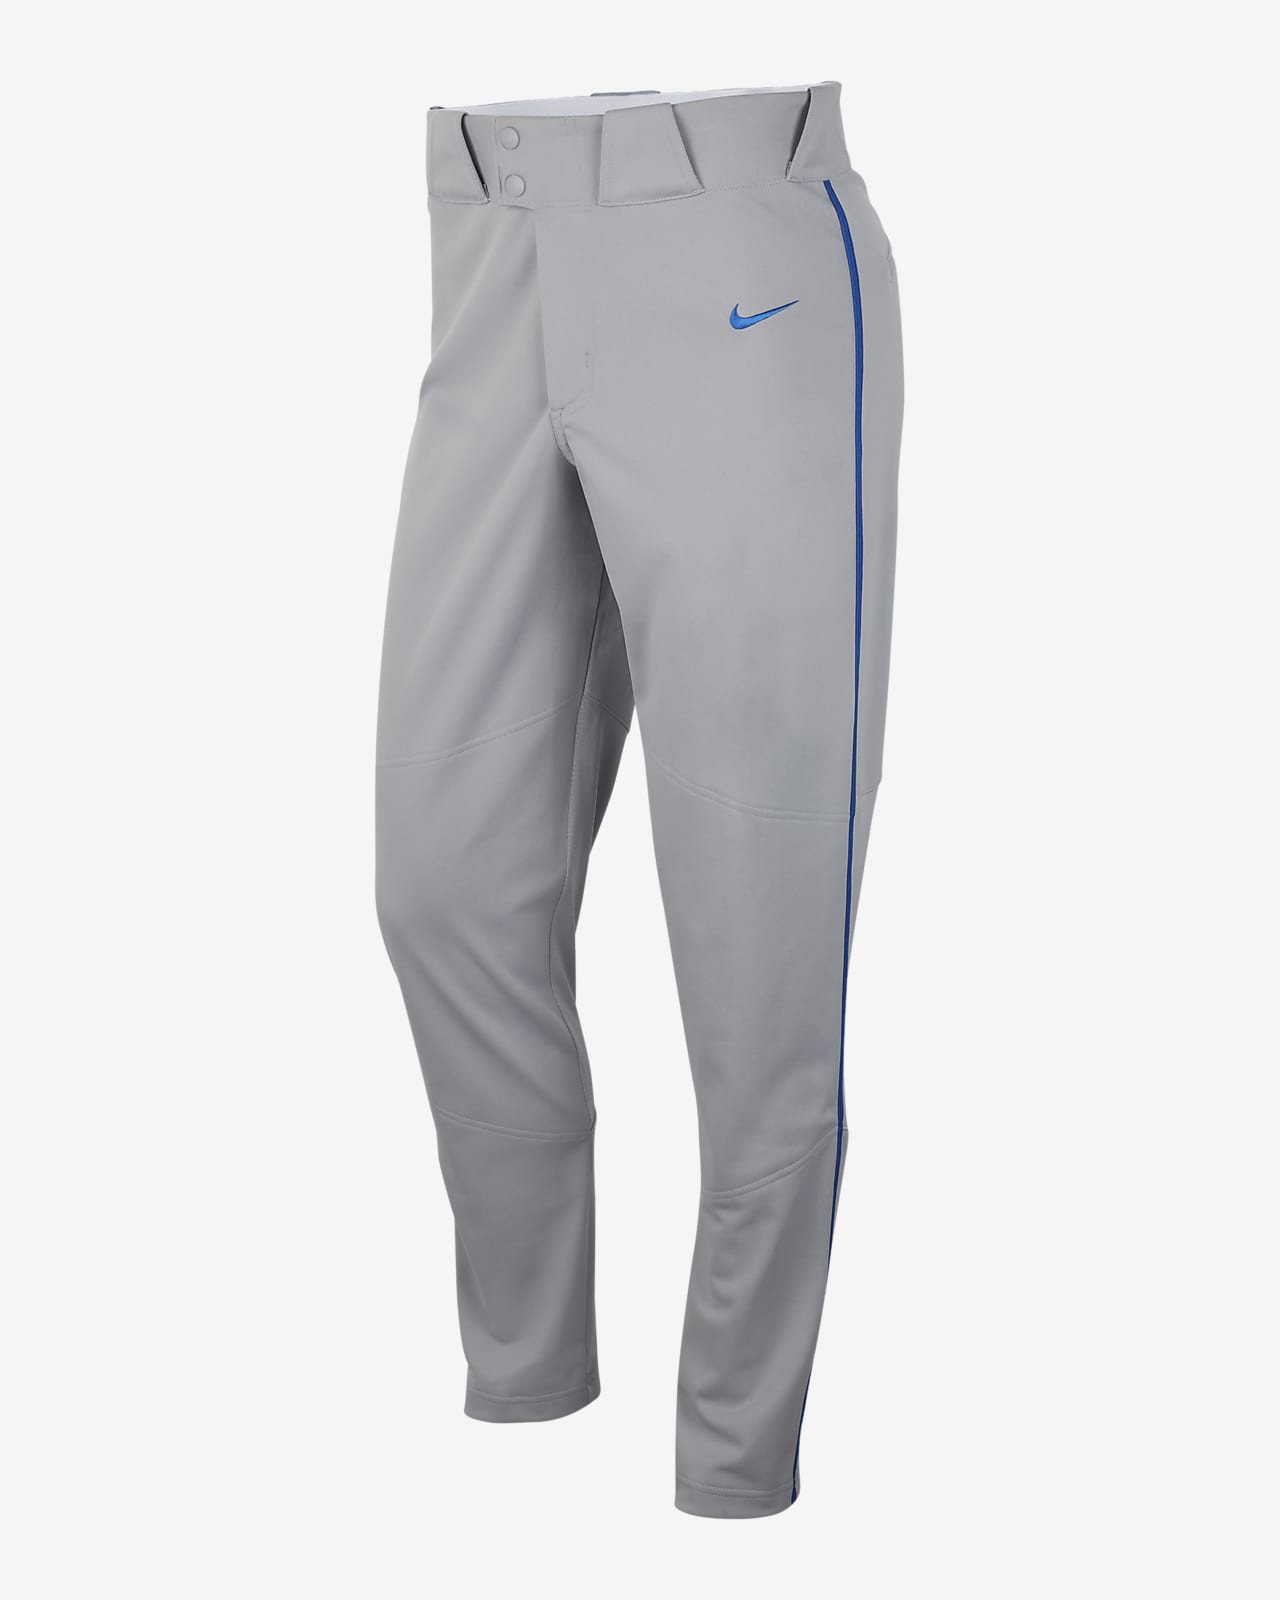 New Nike Vapor Select High Baseball Pants Men's Size Large Gray Blue  BQ6437-054 | eBay